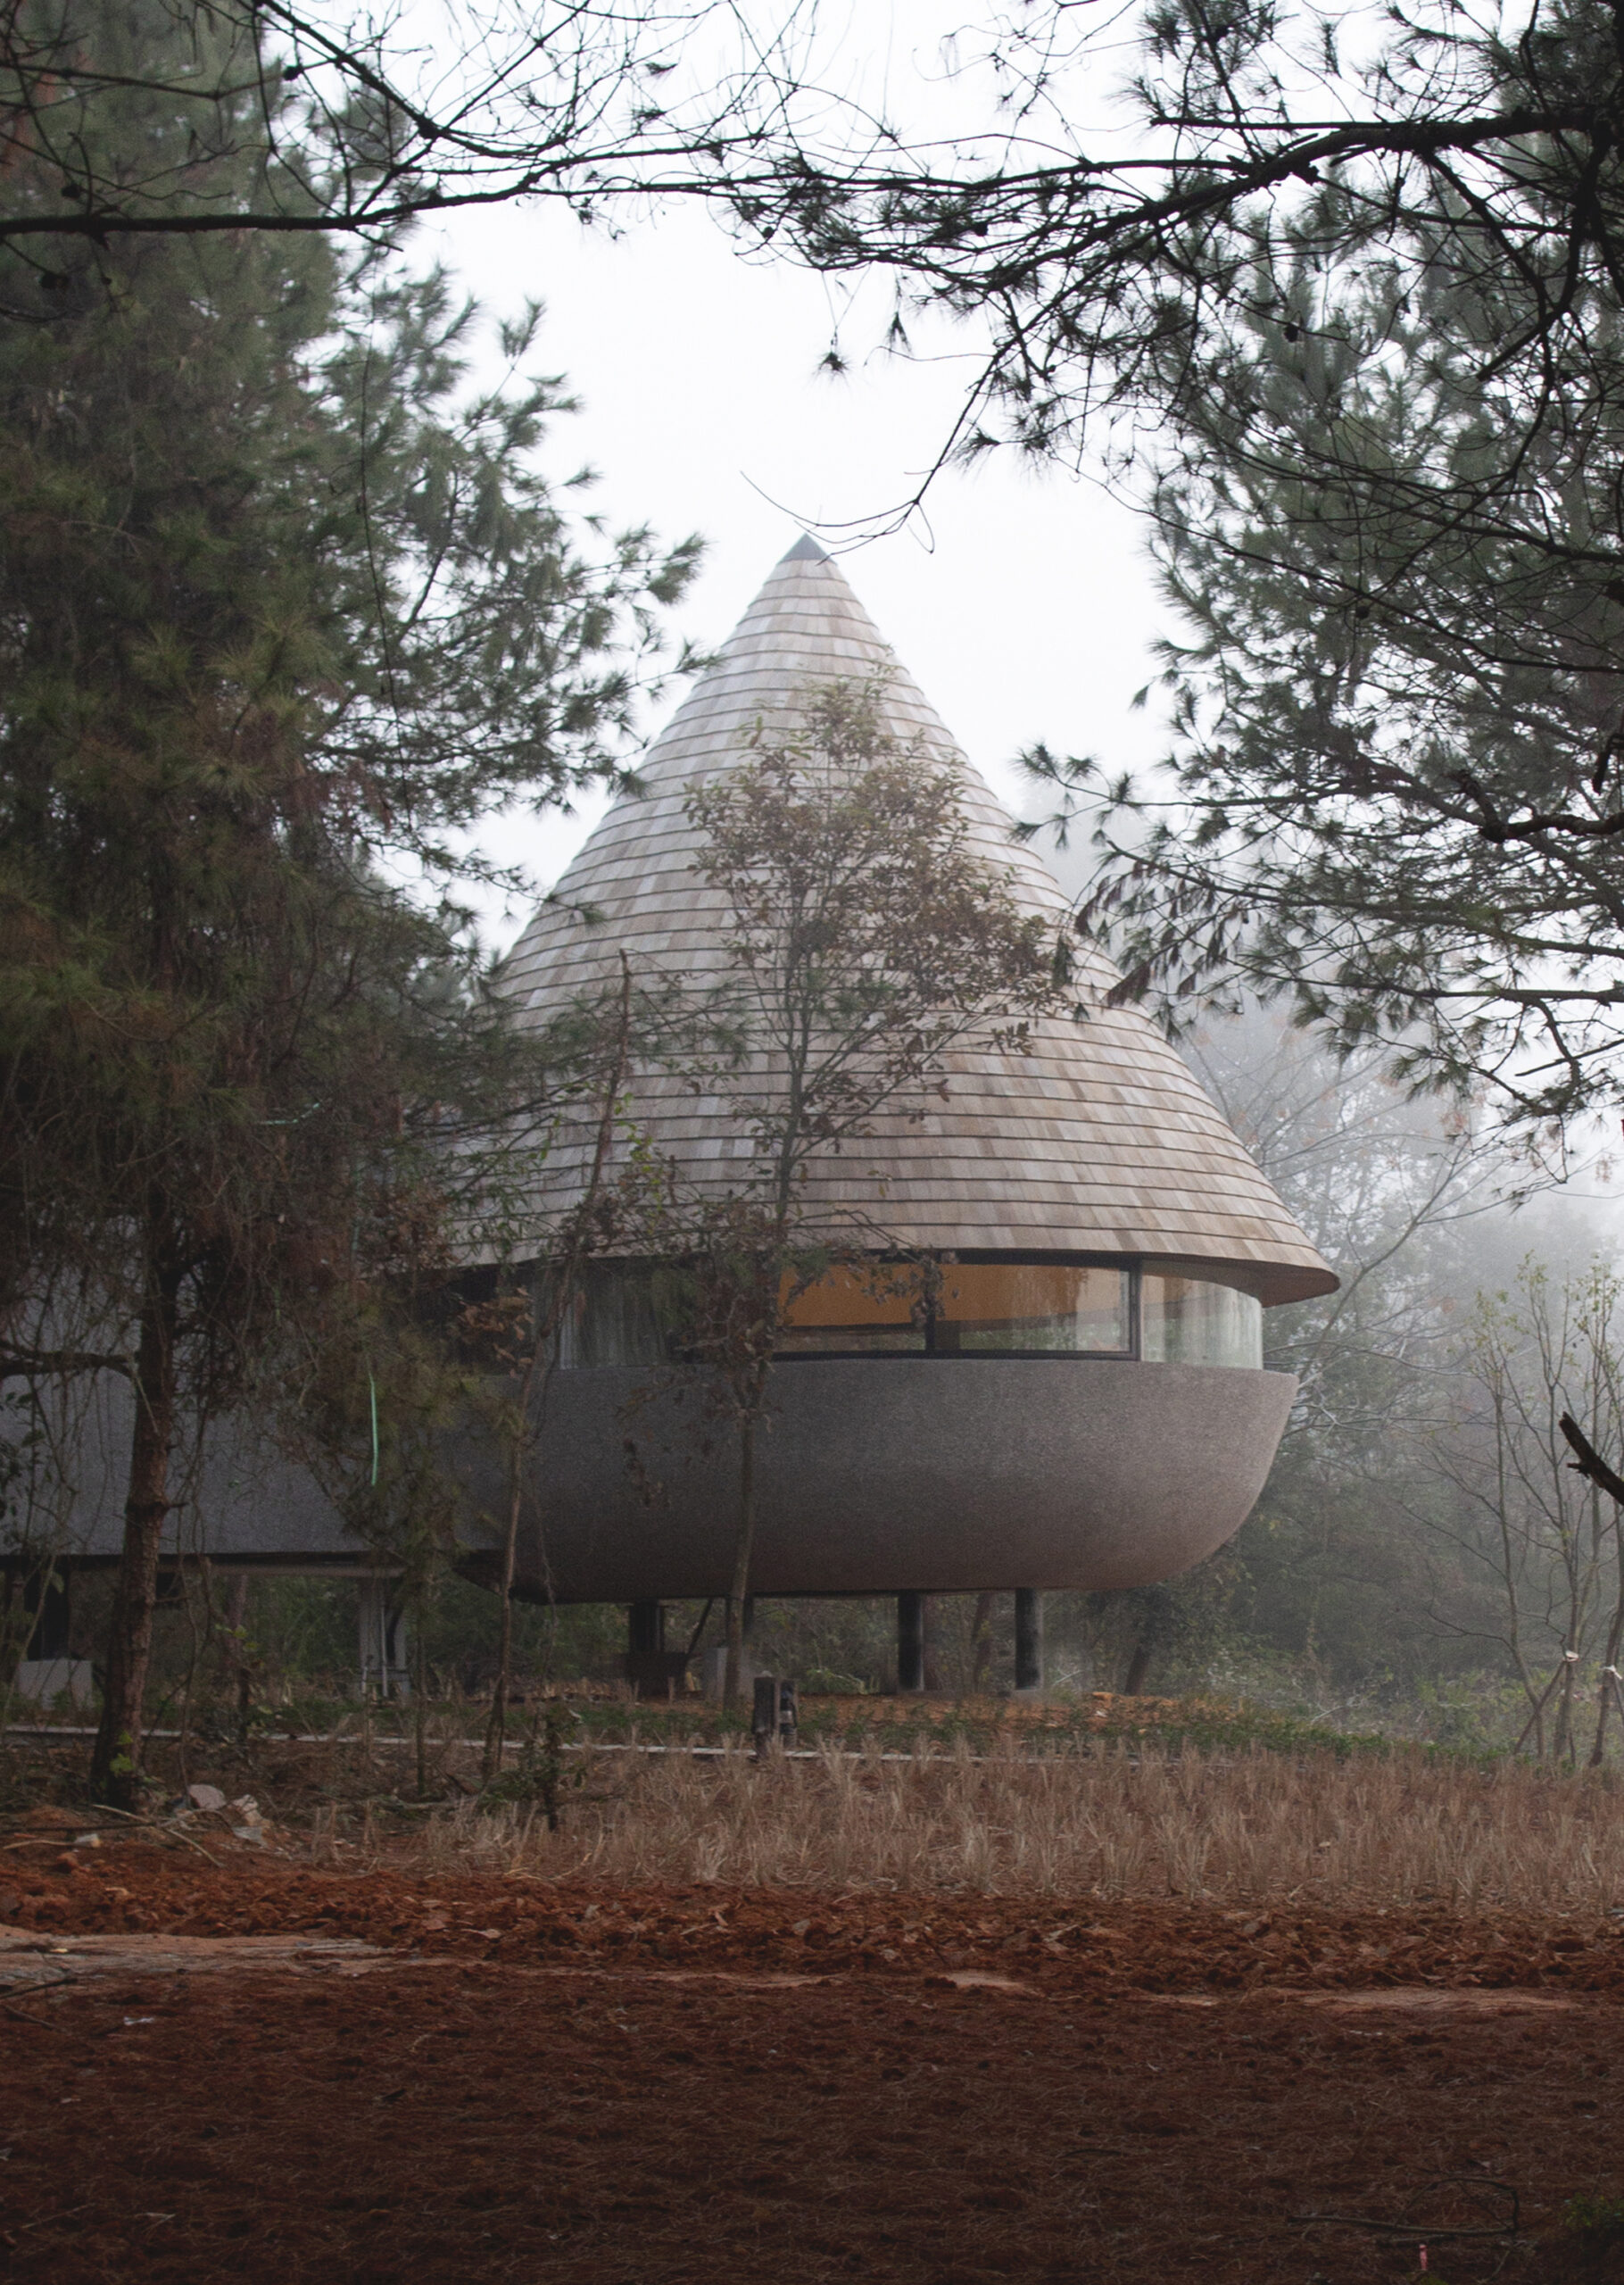 The Mushroom luxe cabin by ZJJZ Atelier in Jiangxi, China